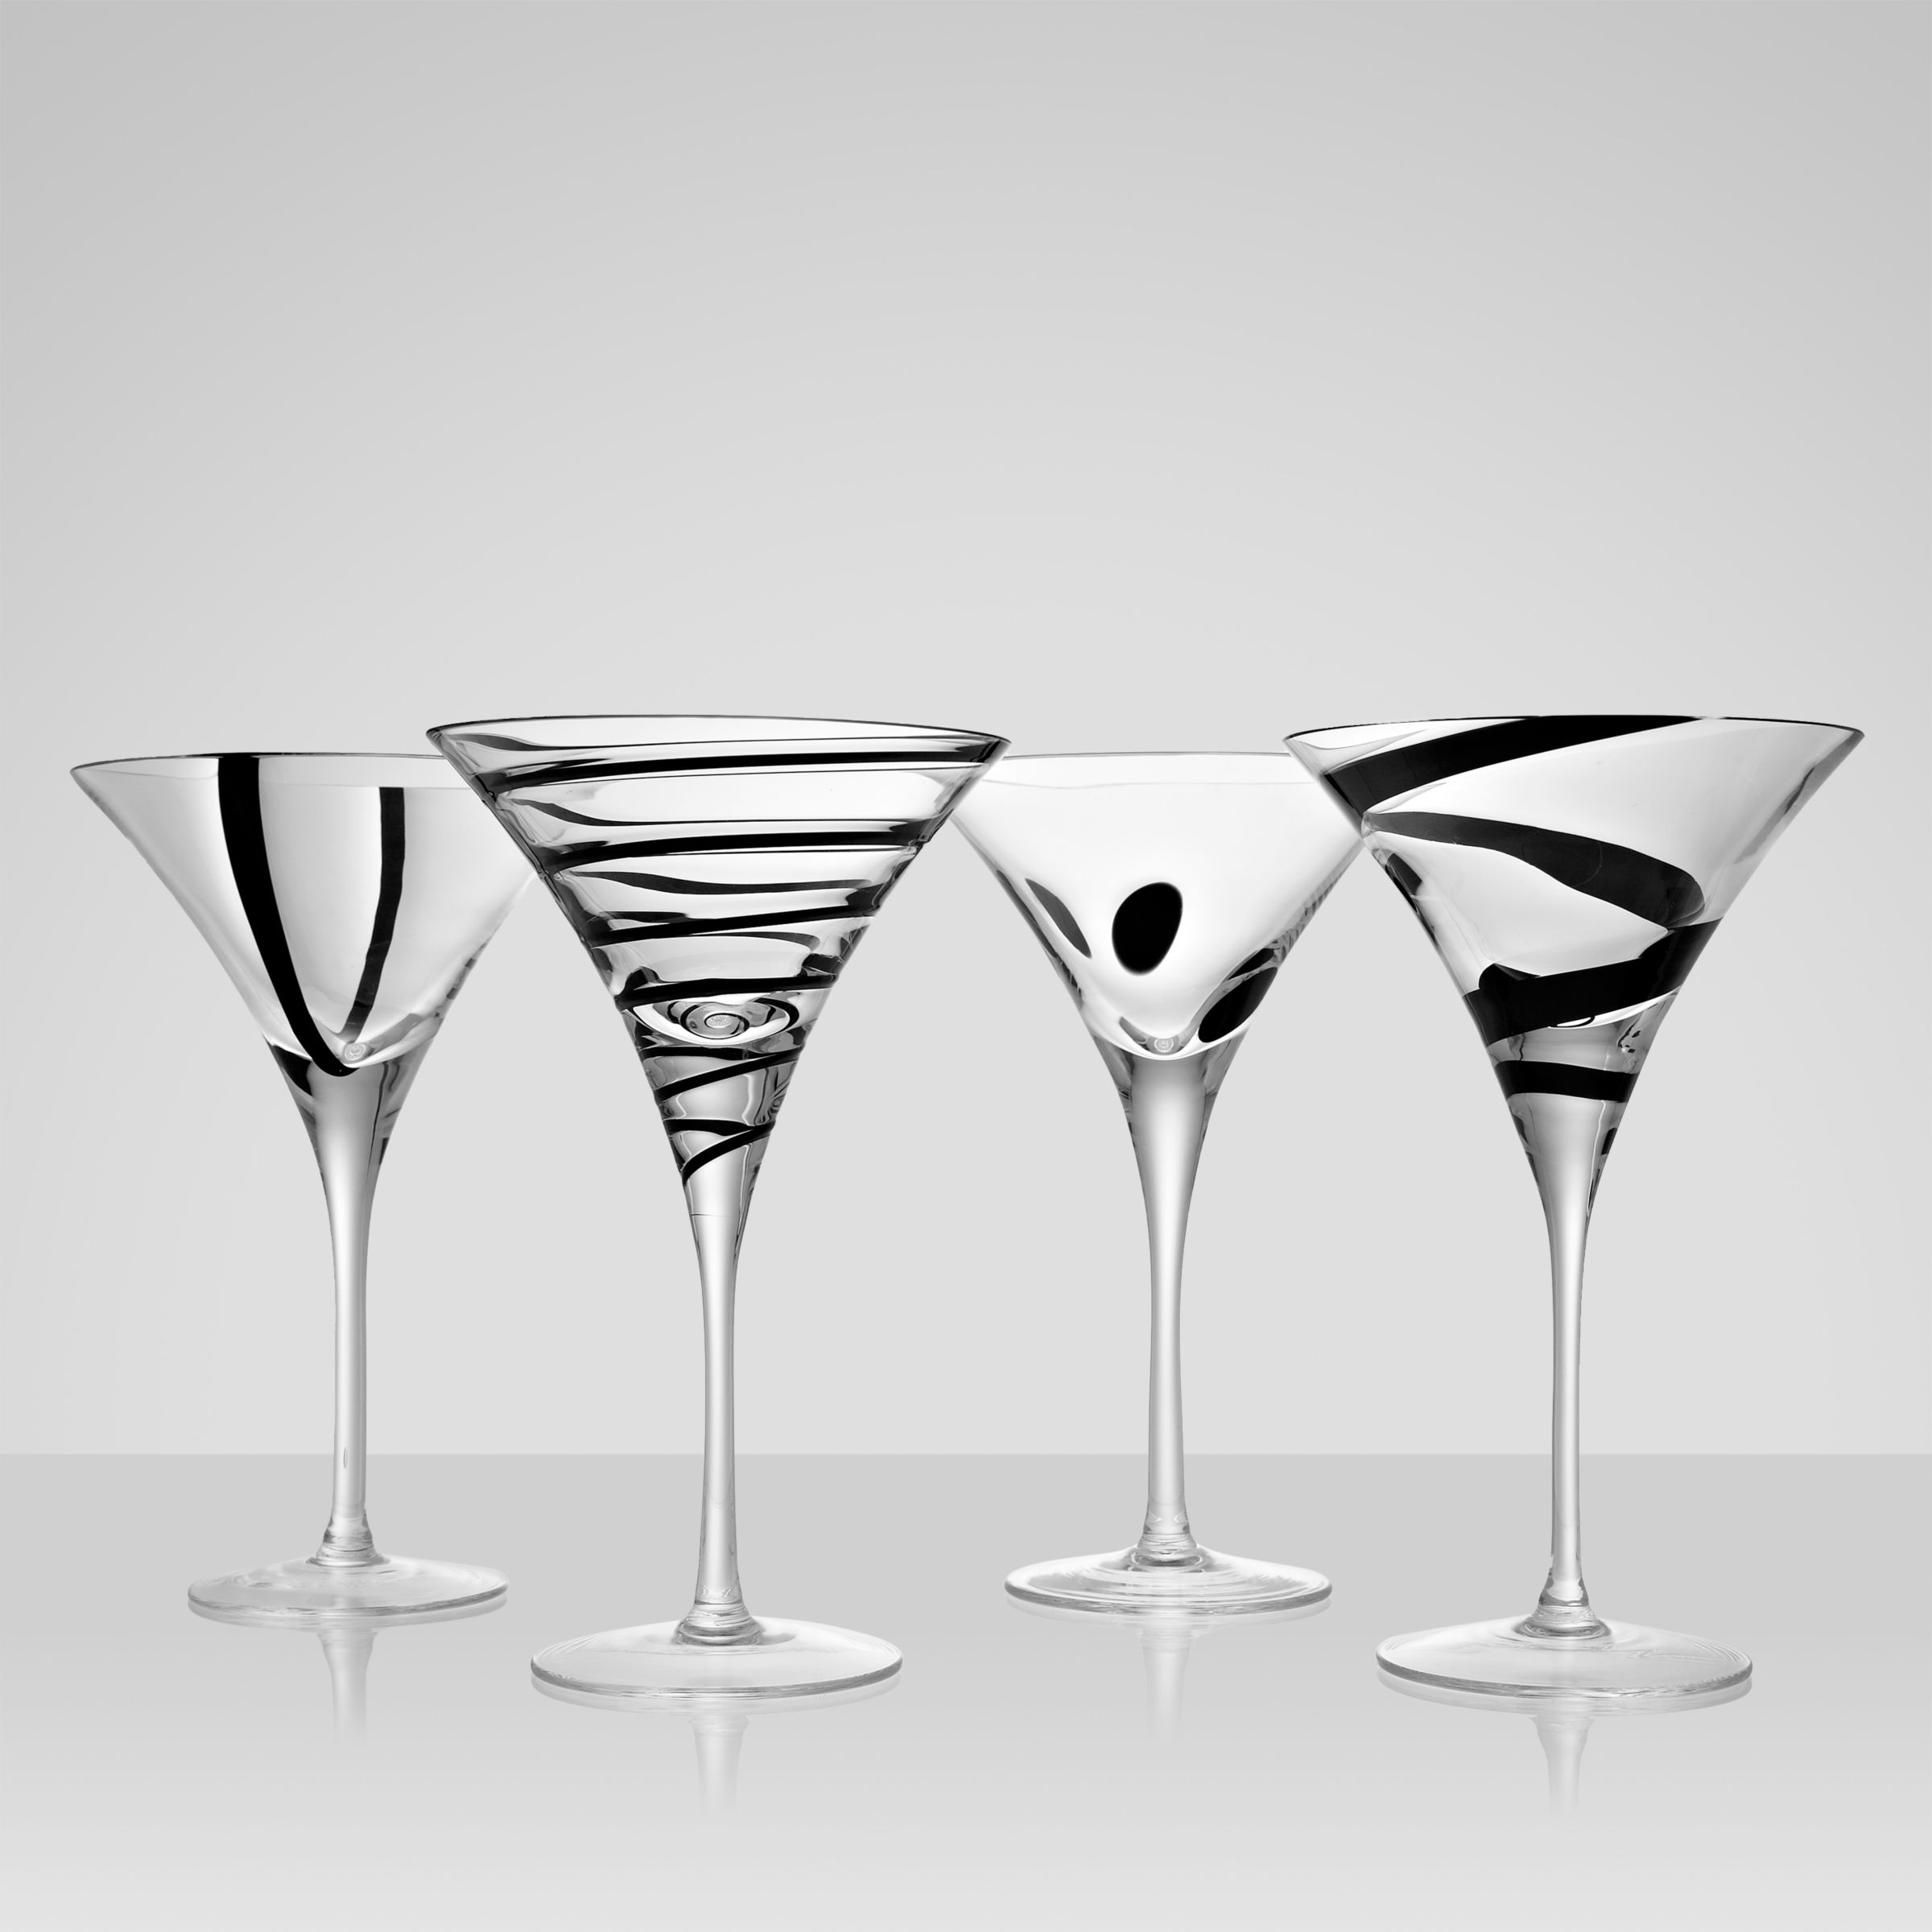 Lsa International Jazz Cocktail Glasses Set Of 4 Black At John Lewis And Partners